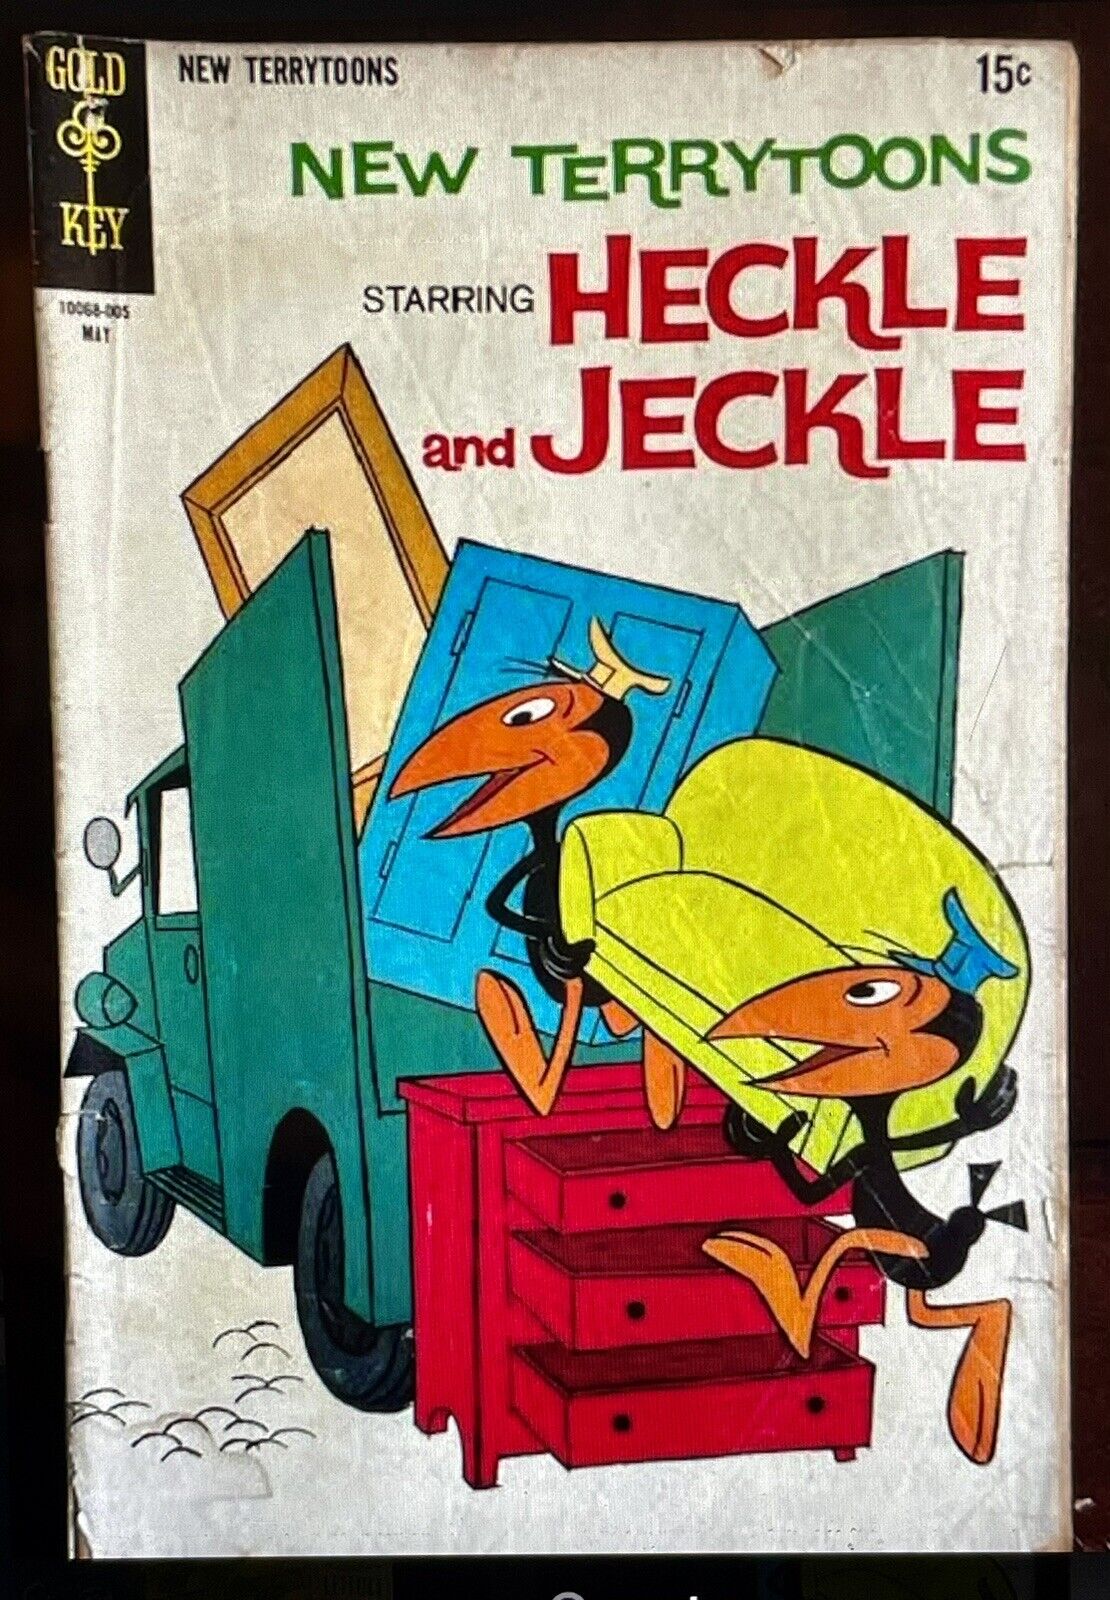 Vintage Gold Key Comics Book New Terrytoons Heckle and Jeckle Nov 1963 15 Cents